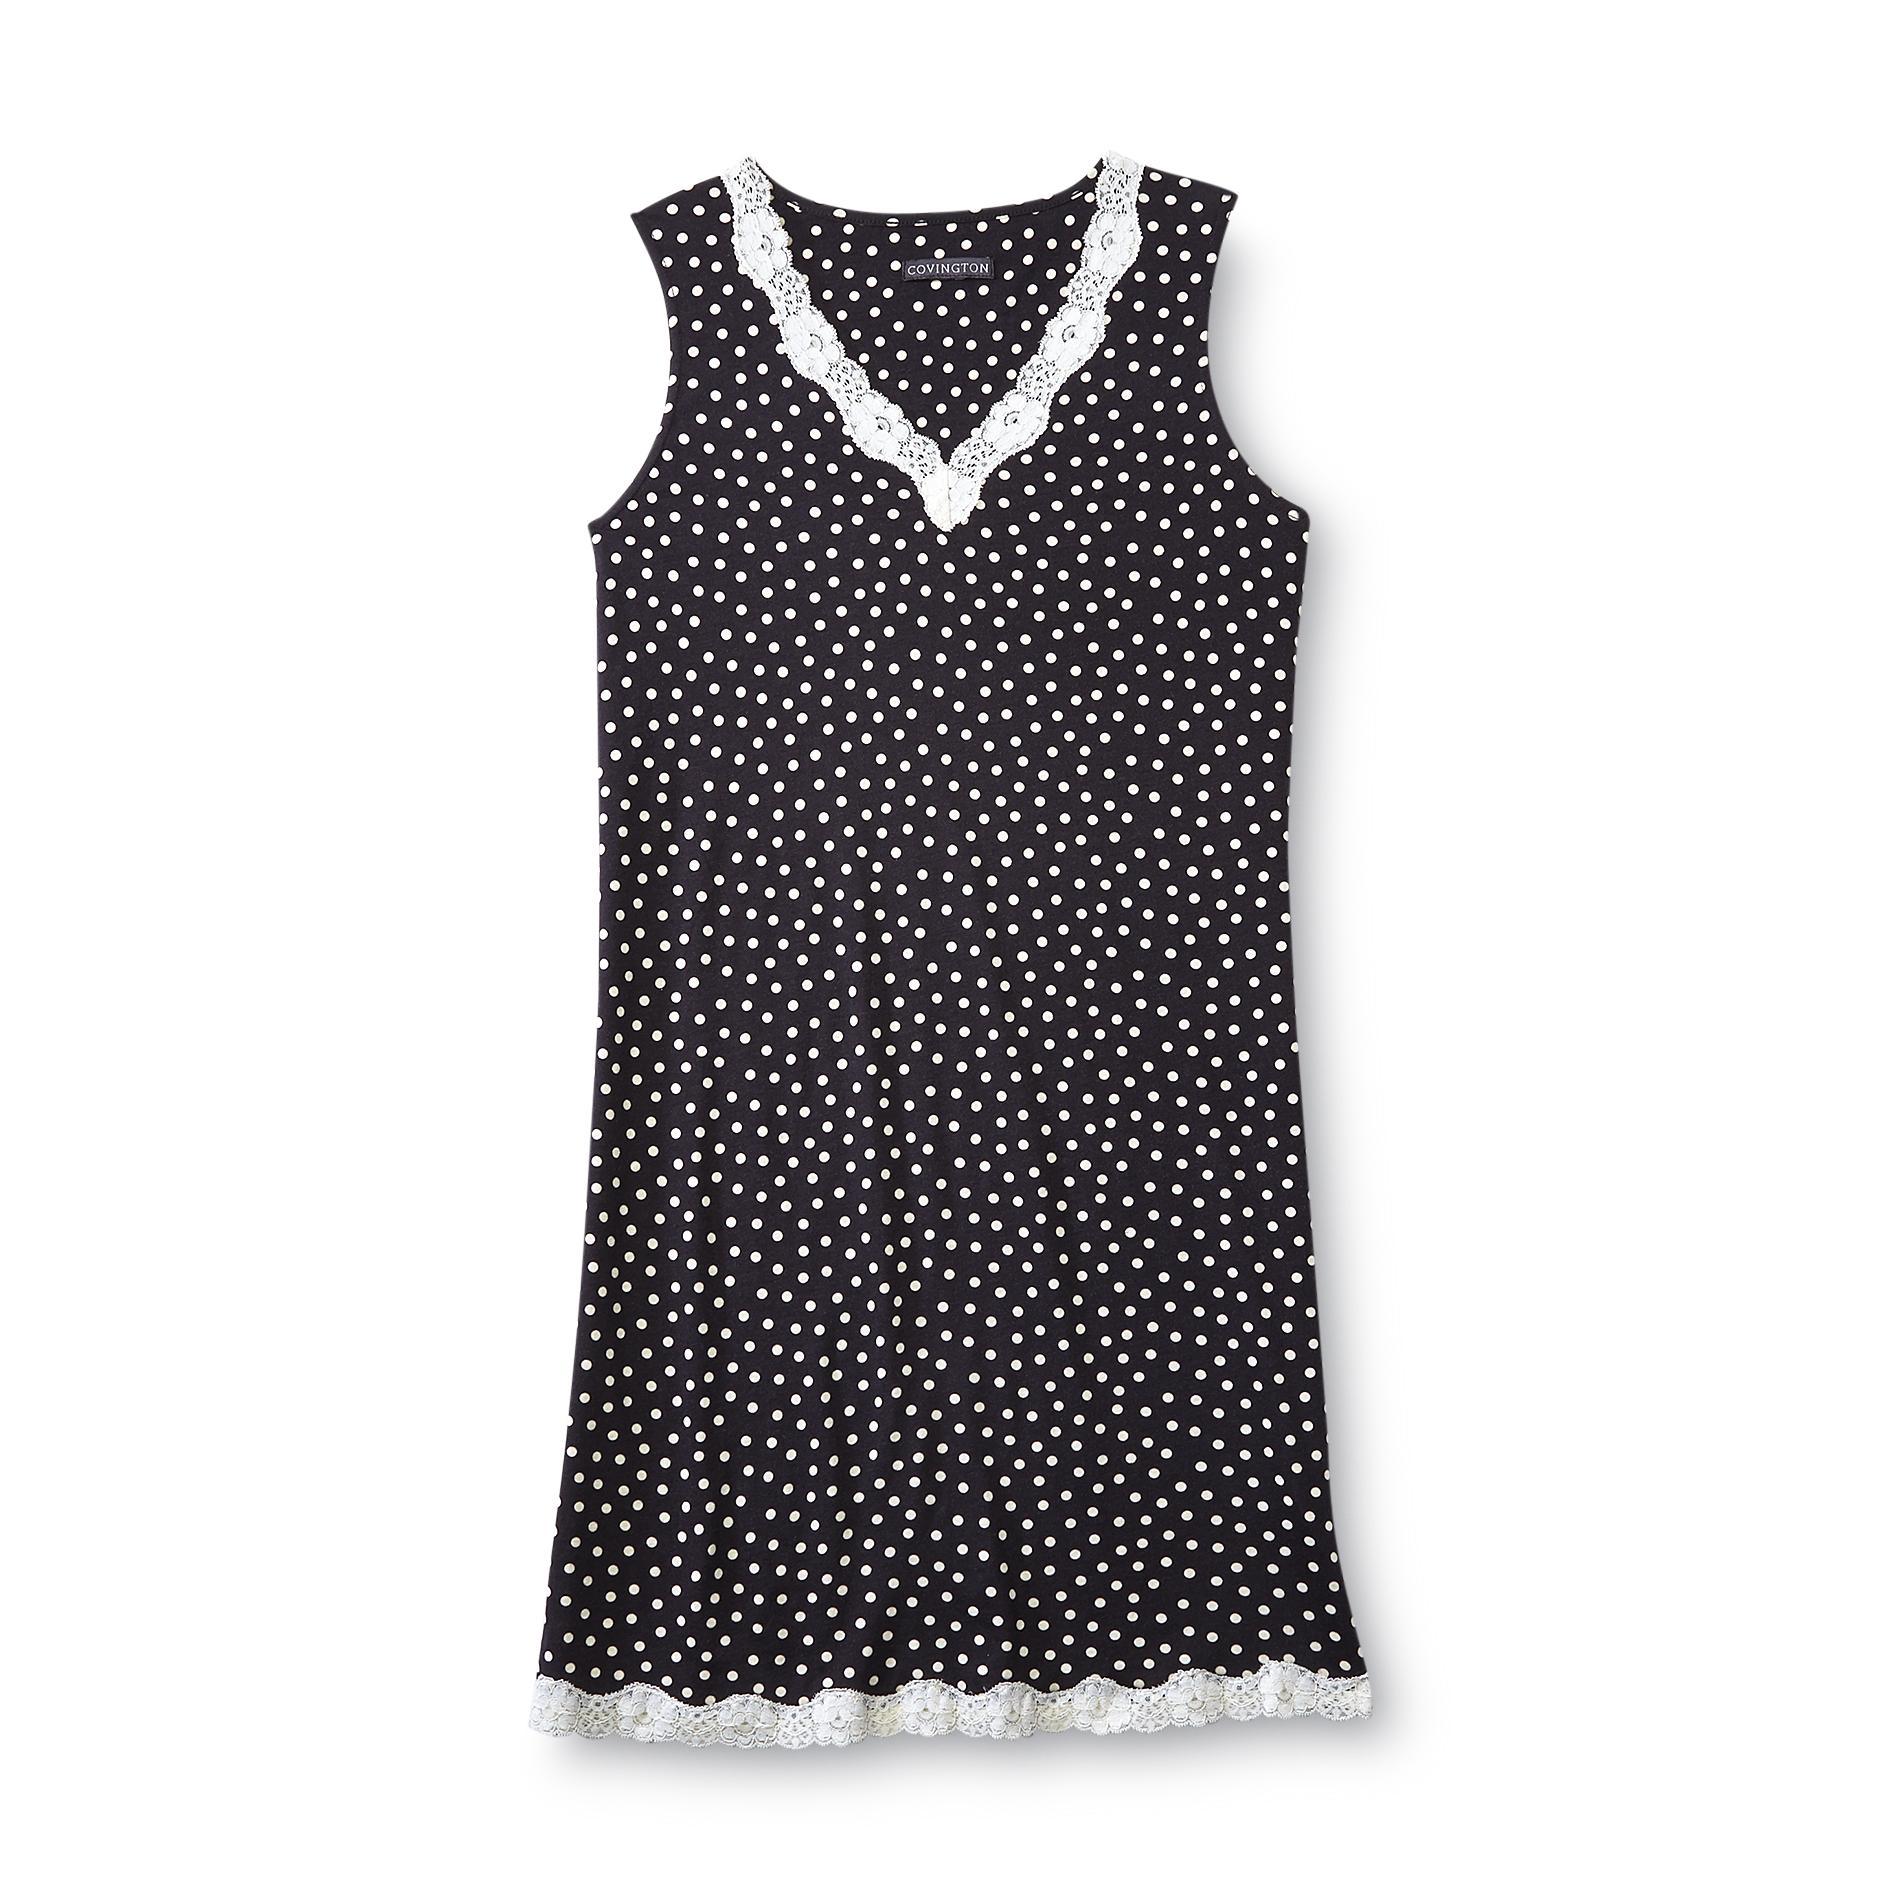 Covington Women's Lace-Trim Chemise Nightgown - Polka Dots